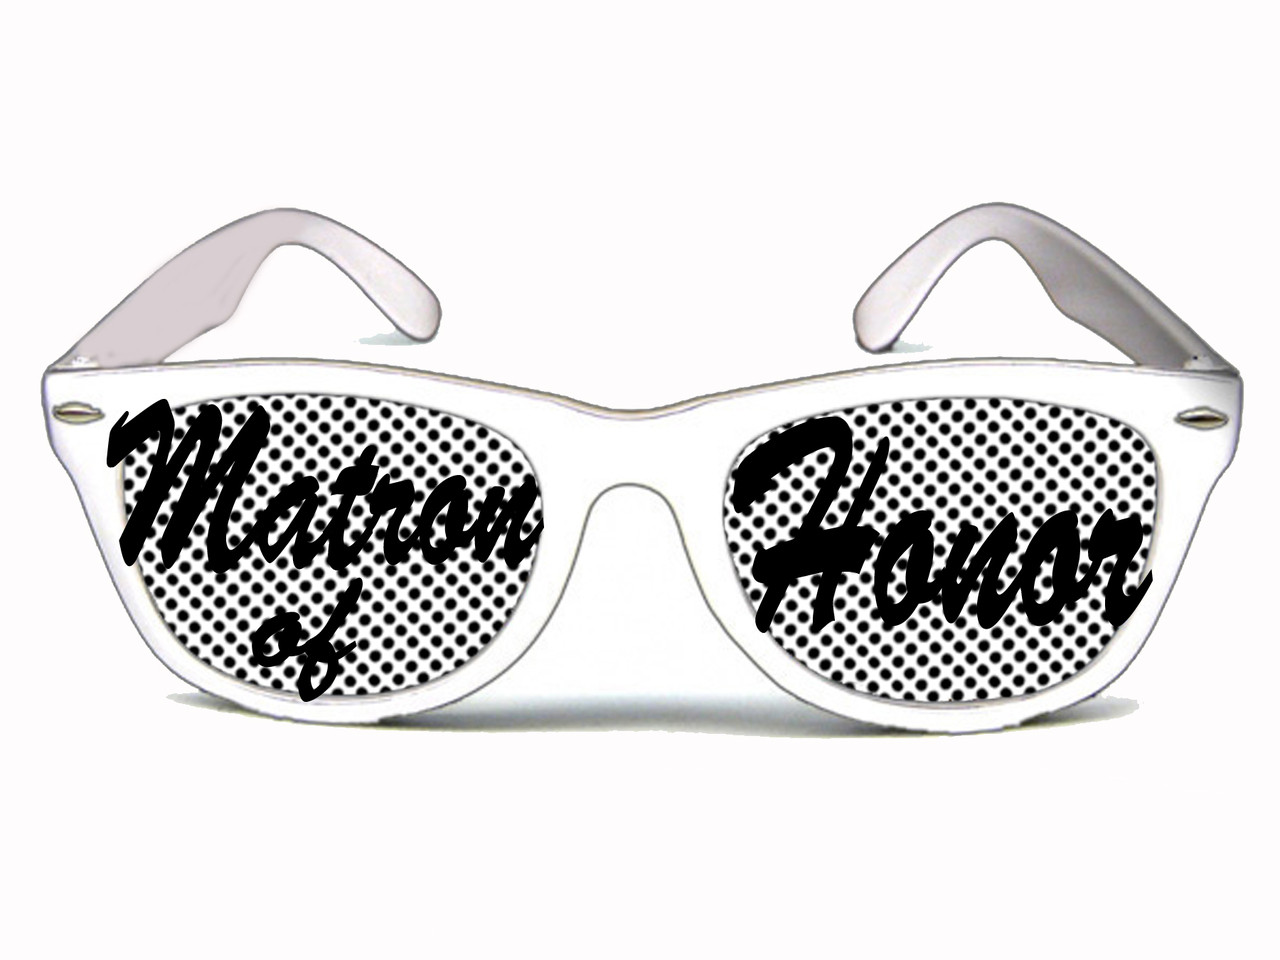 Custom Party Sunglasses  Wedding Sunglasses Favors